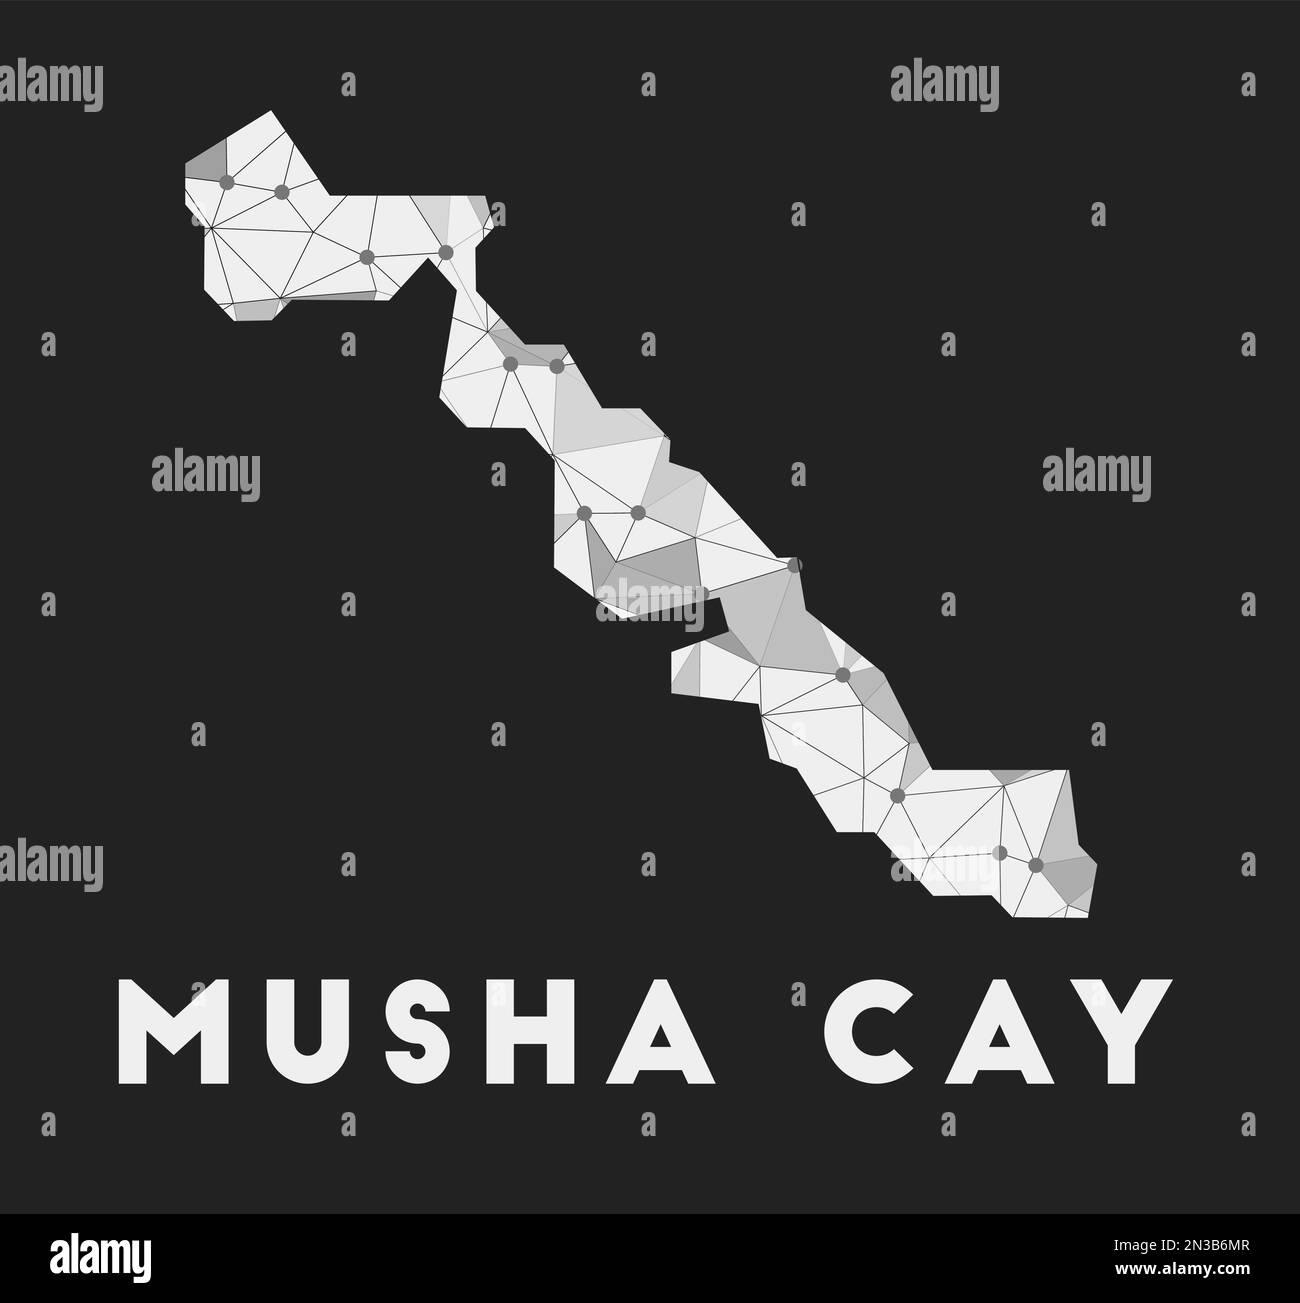 Musha Cay - communication network map of island. Musha Cay trendy geometric design on dark background. Technology, internet, network, telecommunicatio Stock Vector